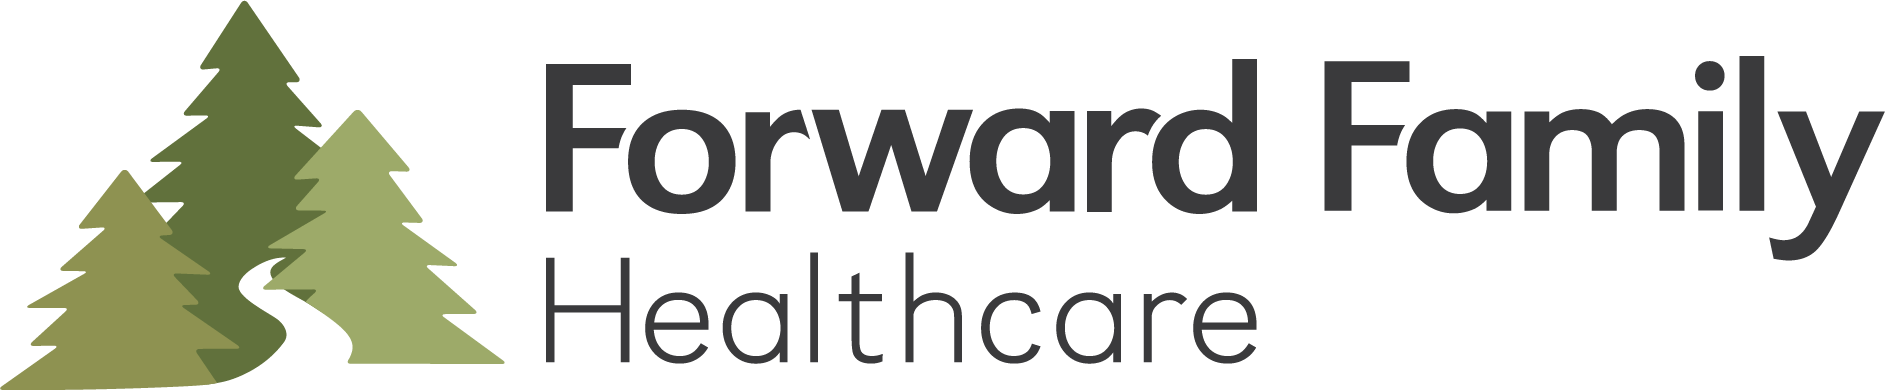 Forward Family Healthcare